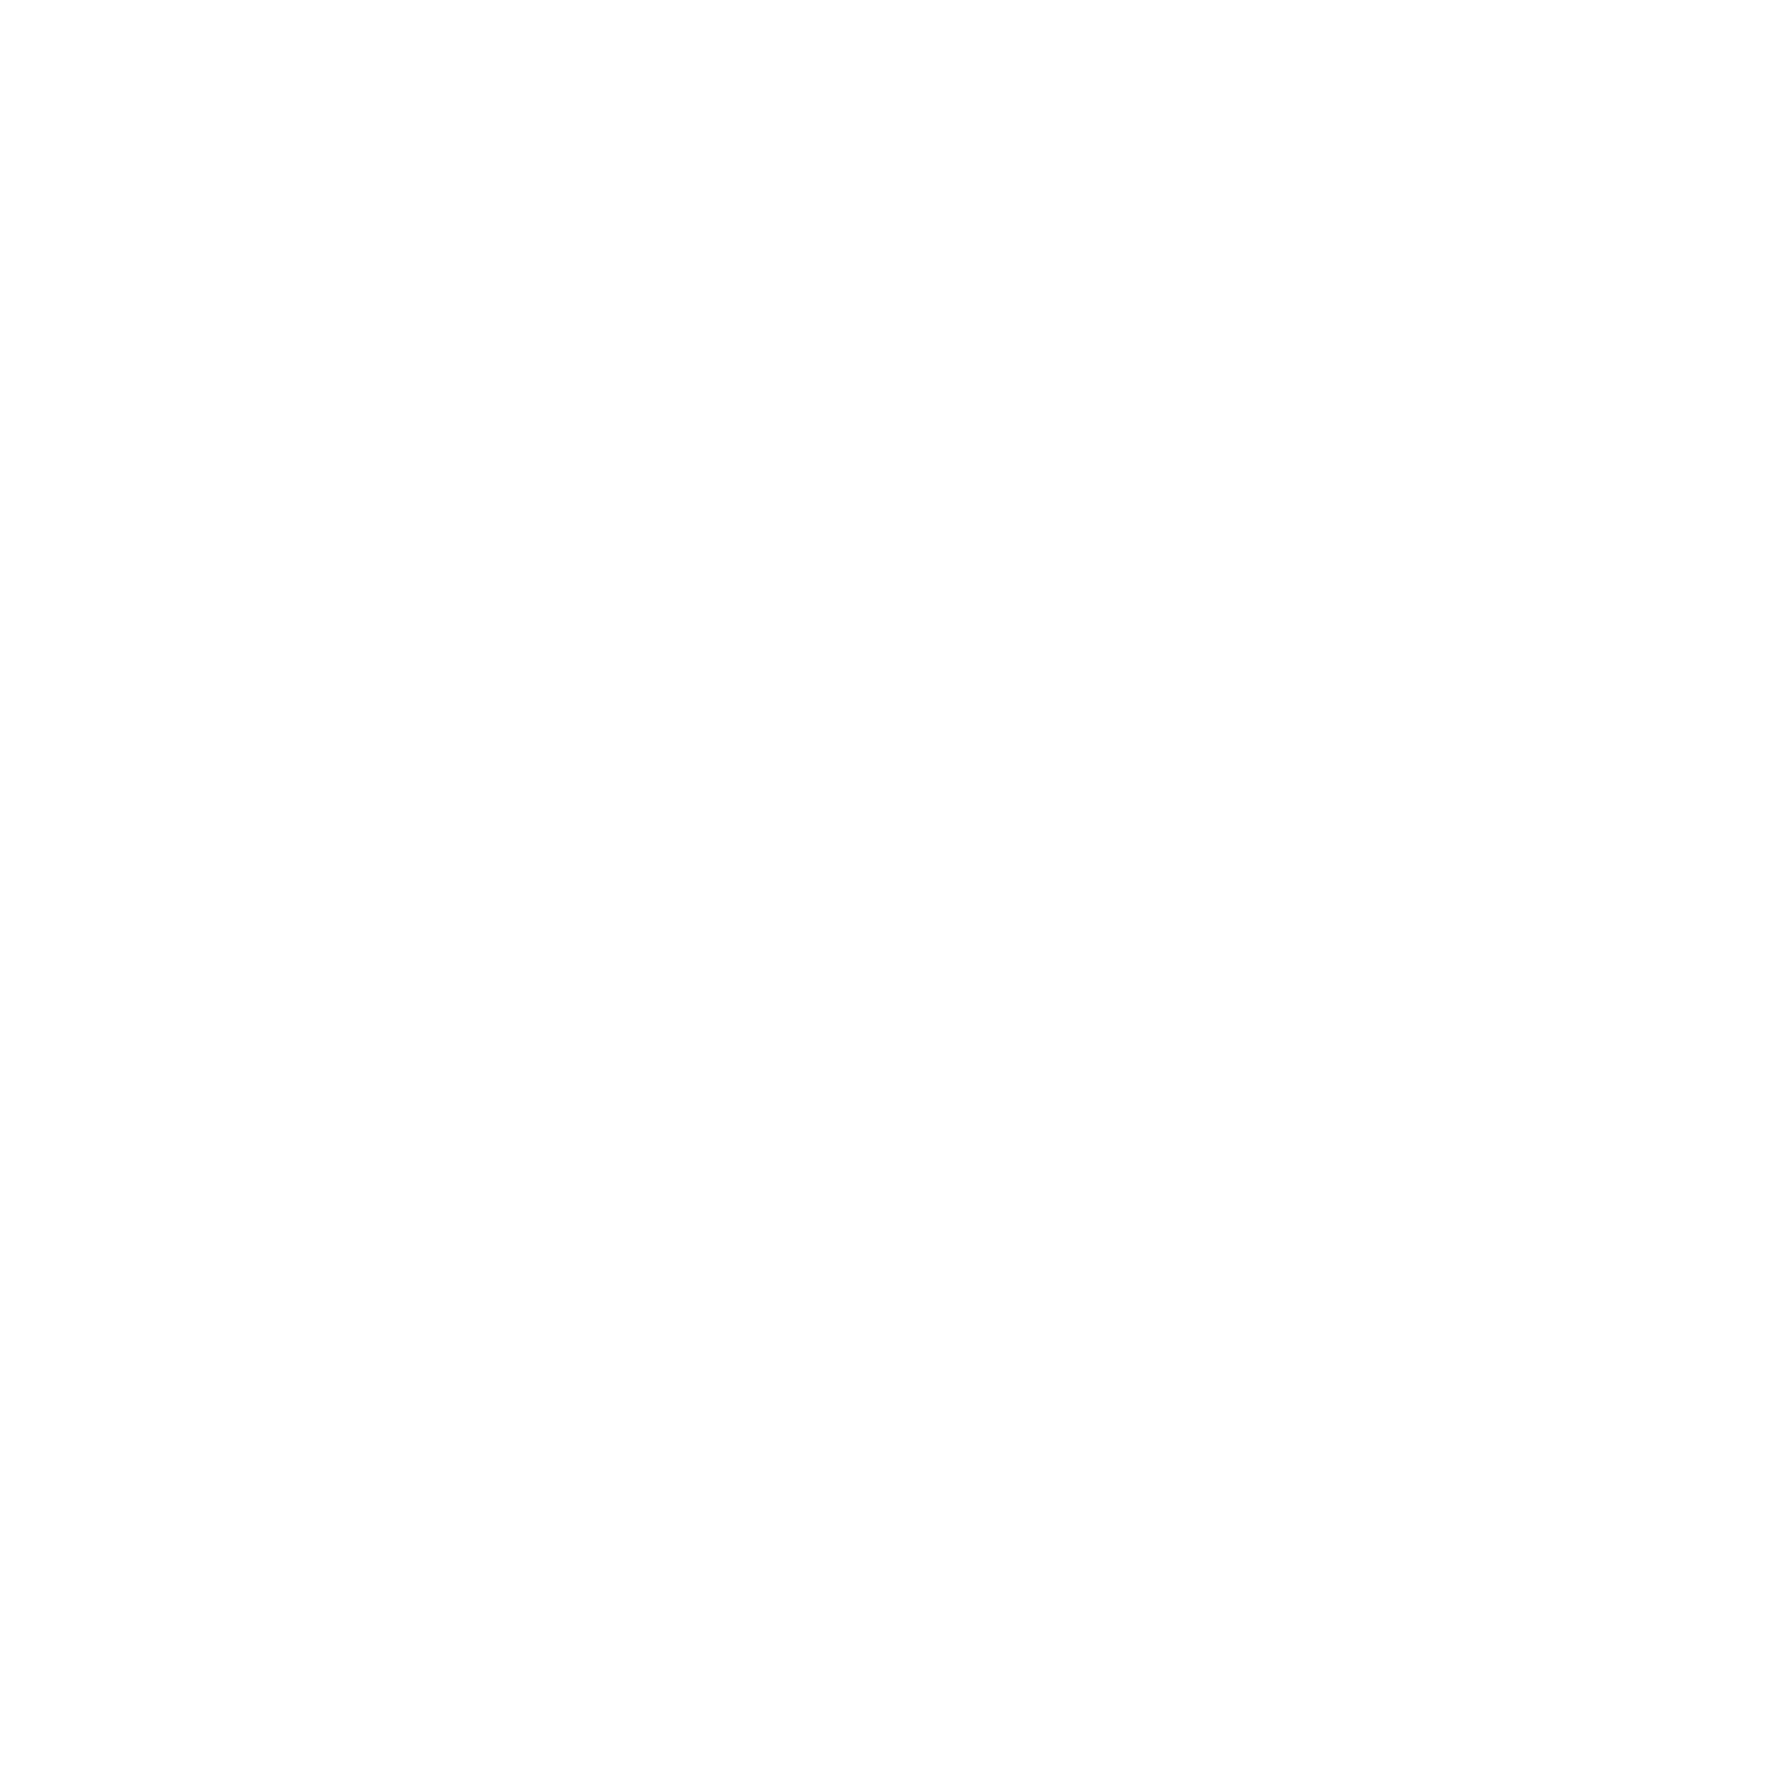 Mellanox Logo - Mellanox Technologies: Media Kit